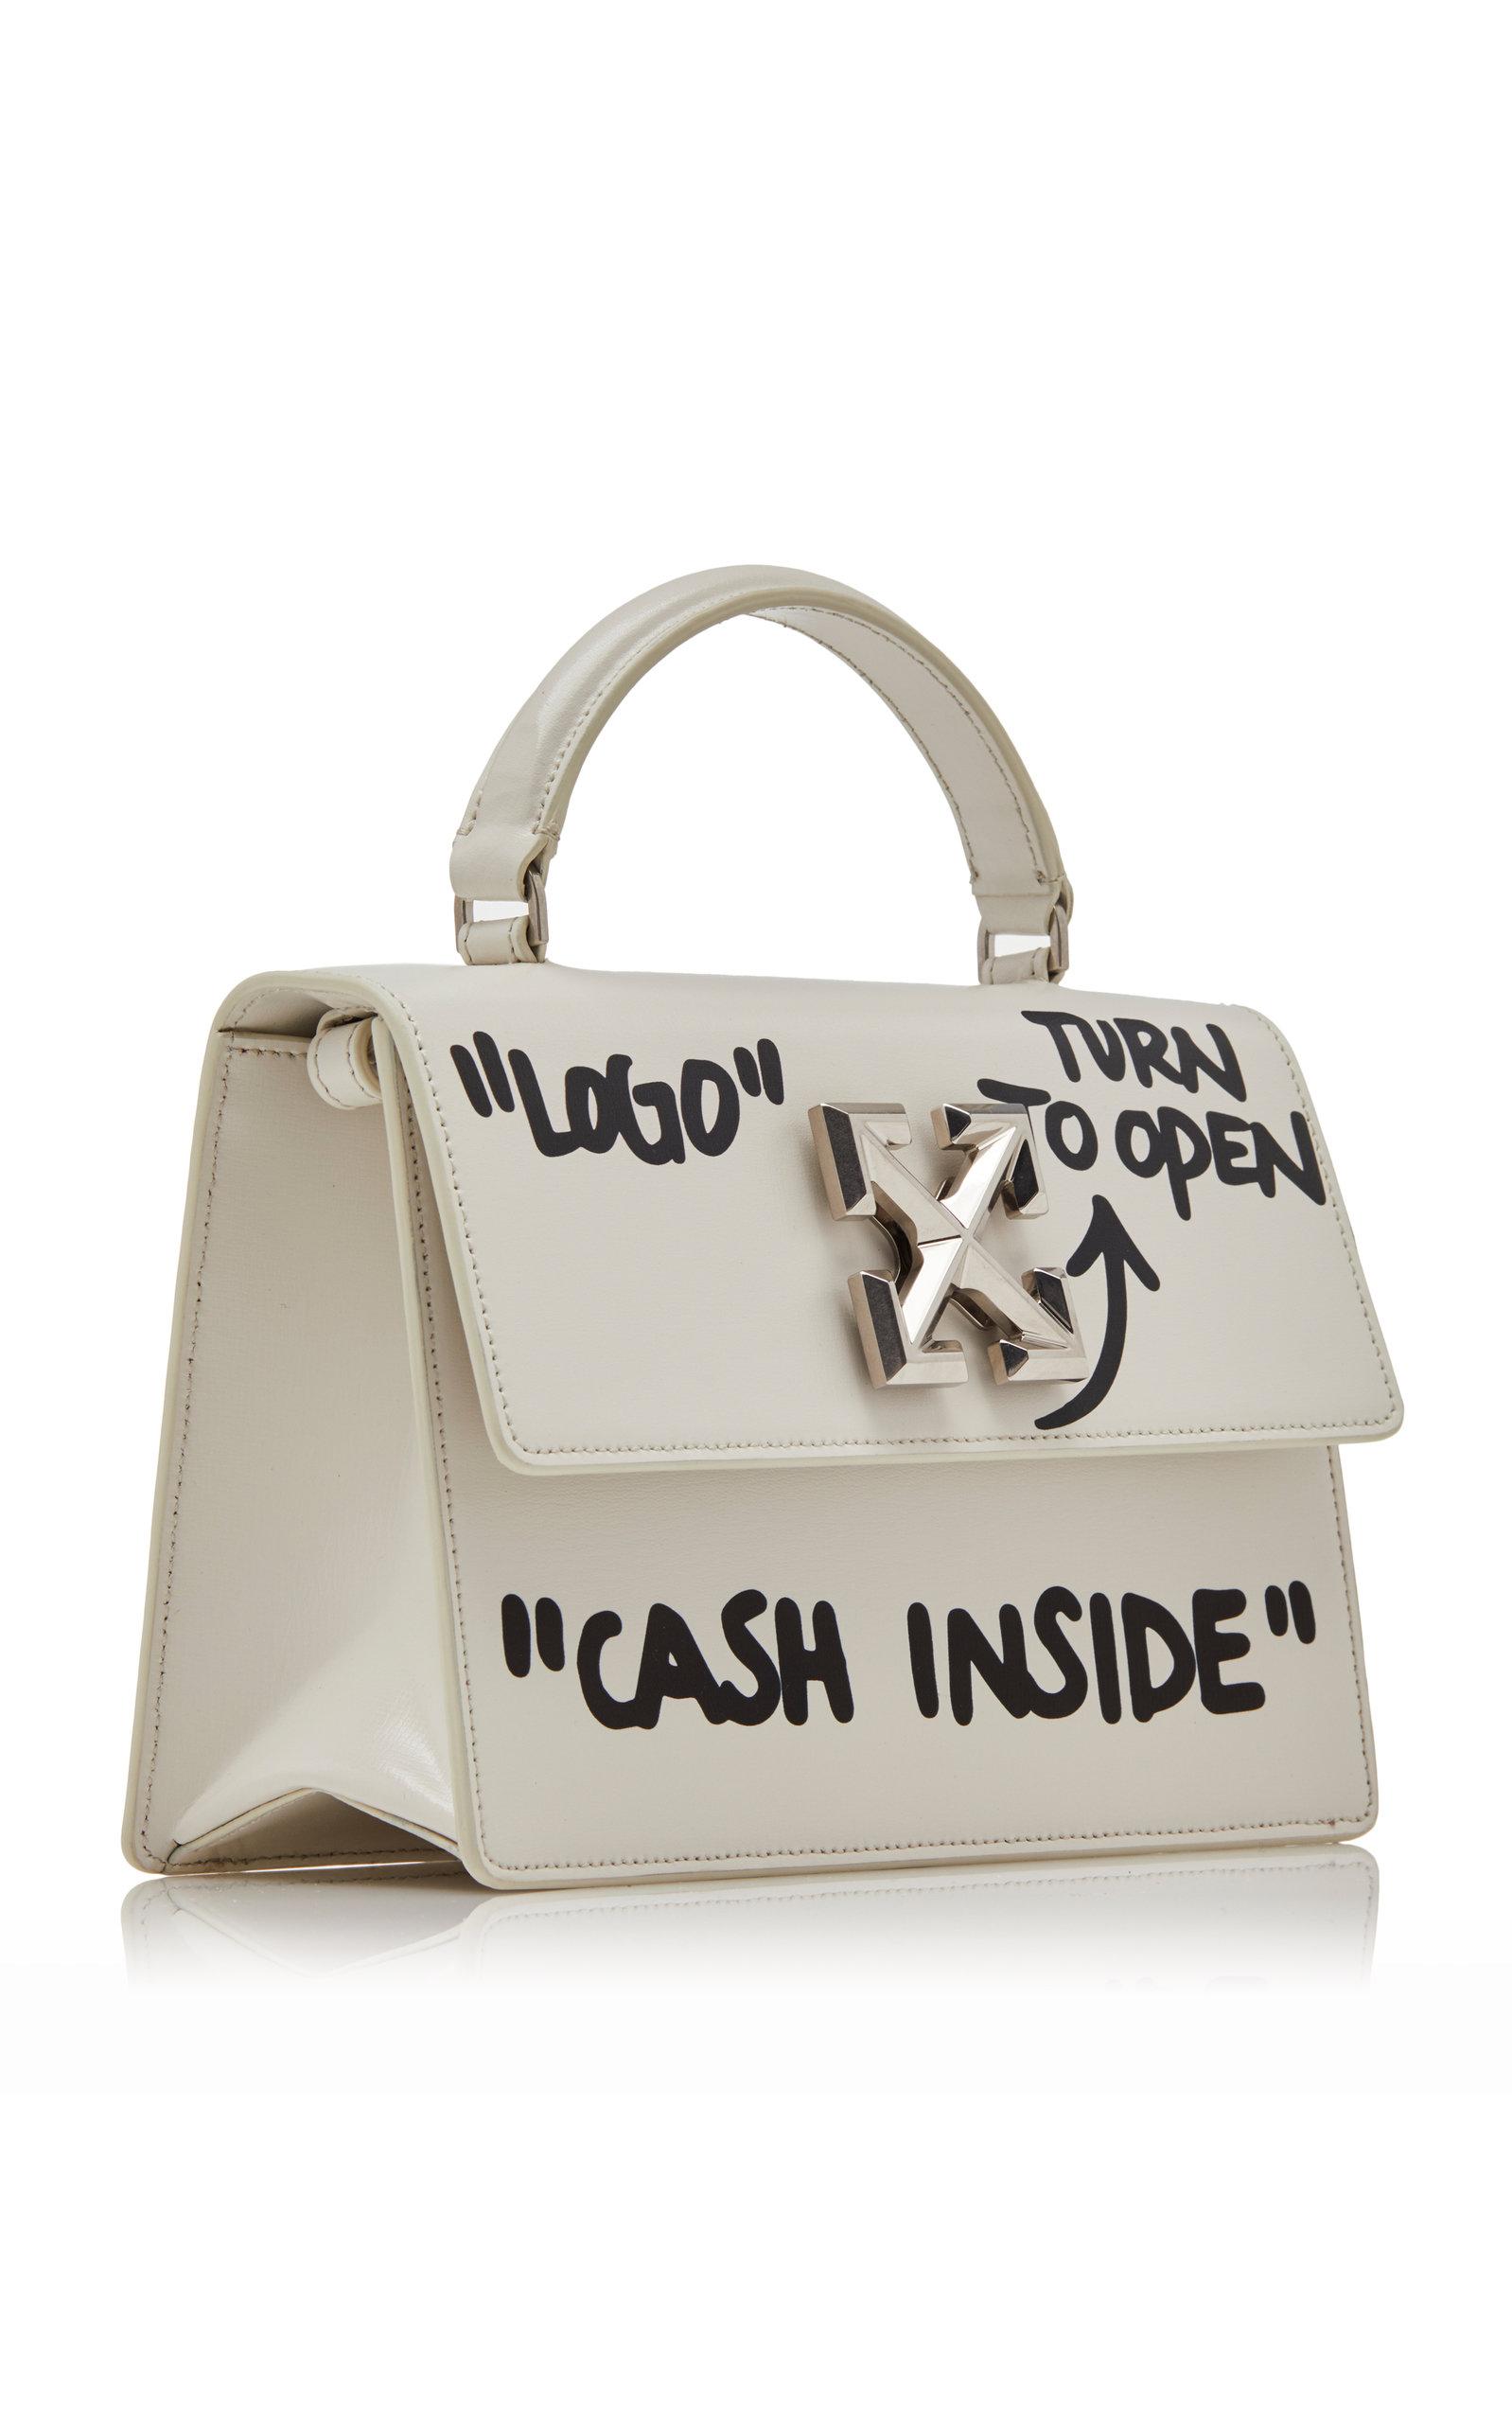 Off-White-Virgil-Cash-Inside-Bag-Trends-Fashion-Accessories-Tom